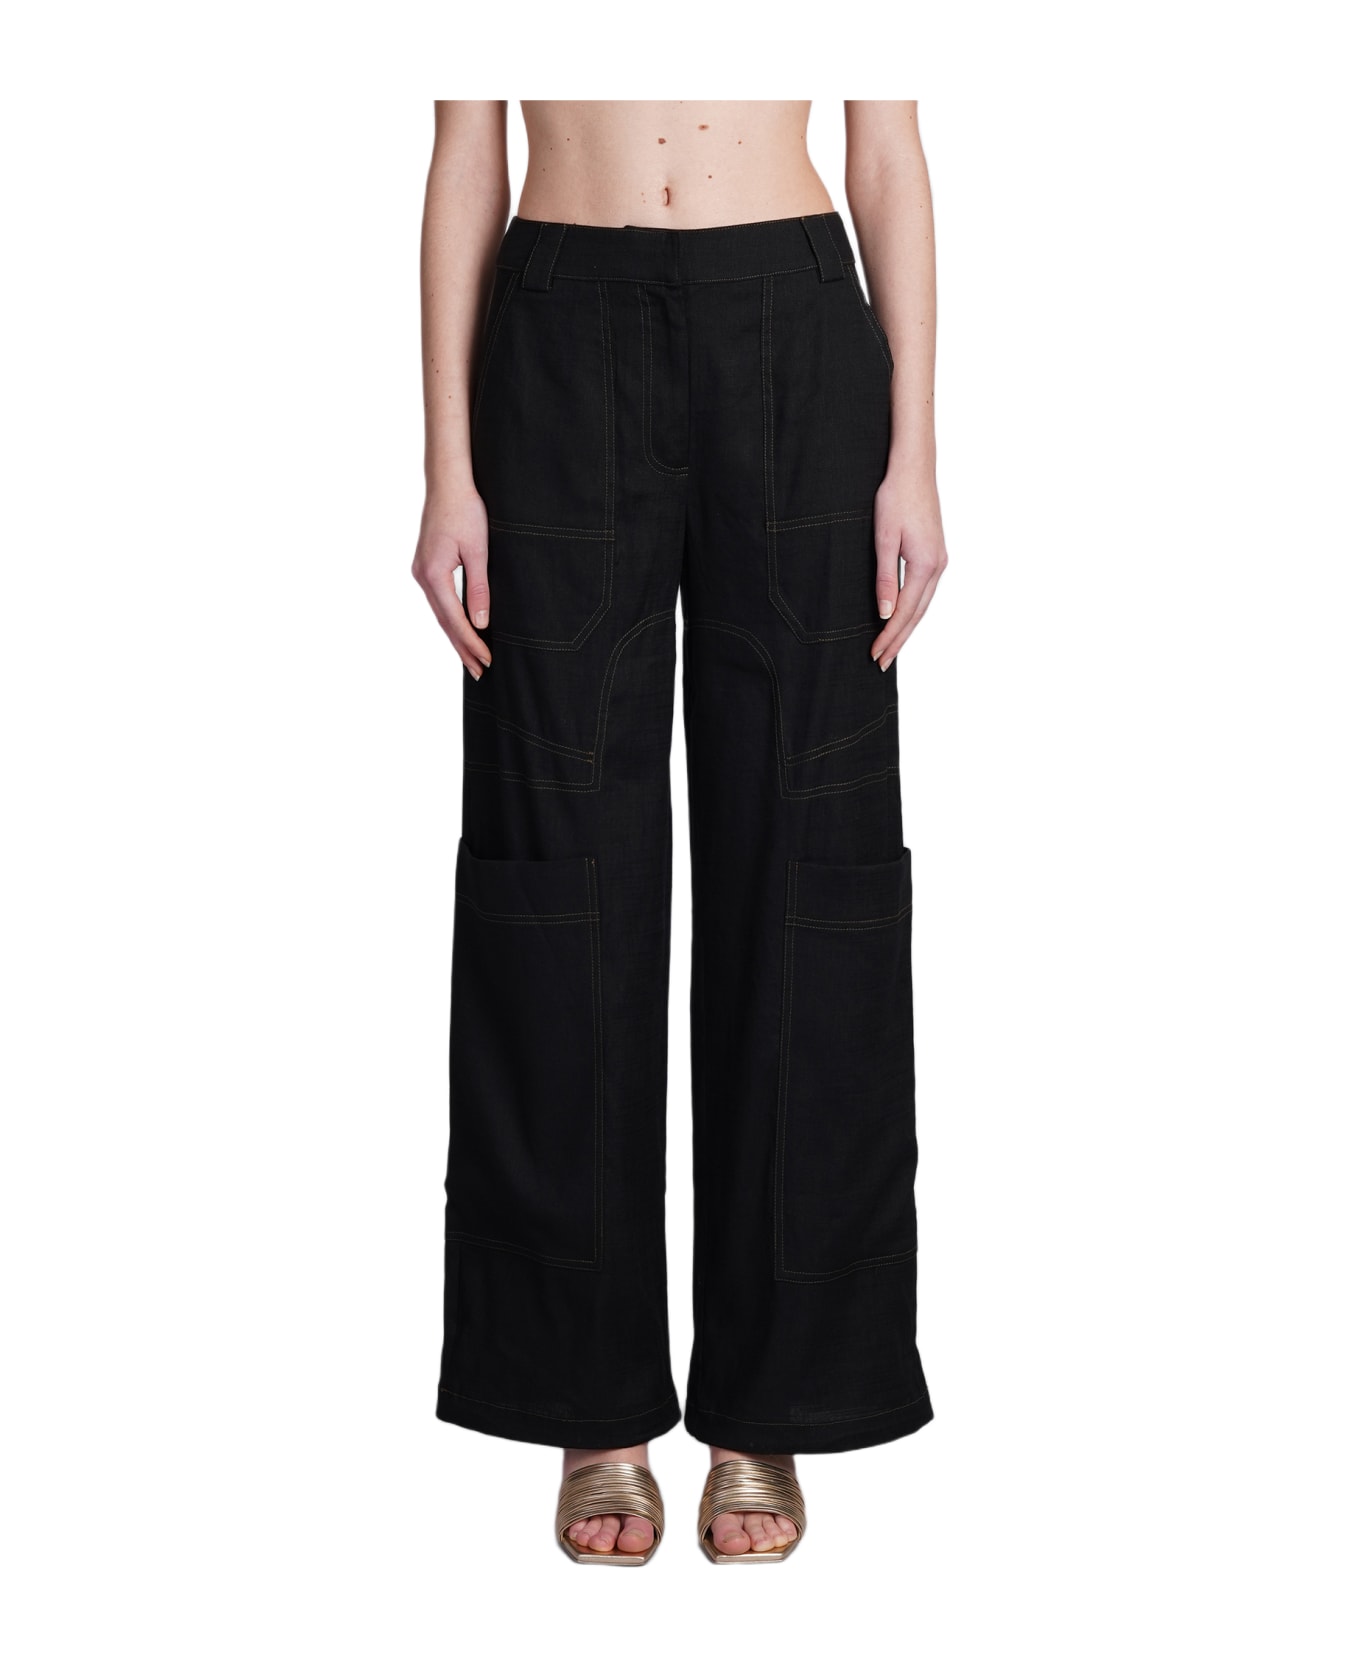 Cult Gaia Wynn Pants In Black Linen - black